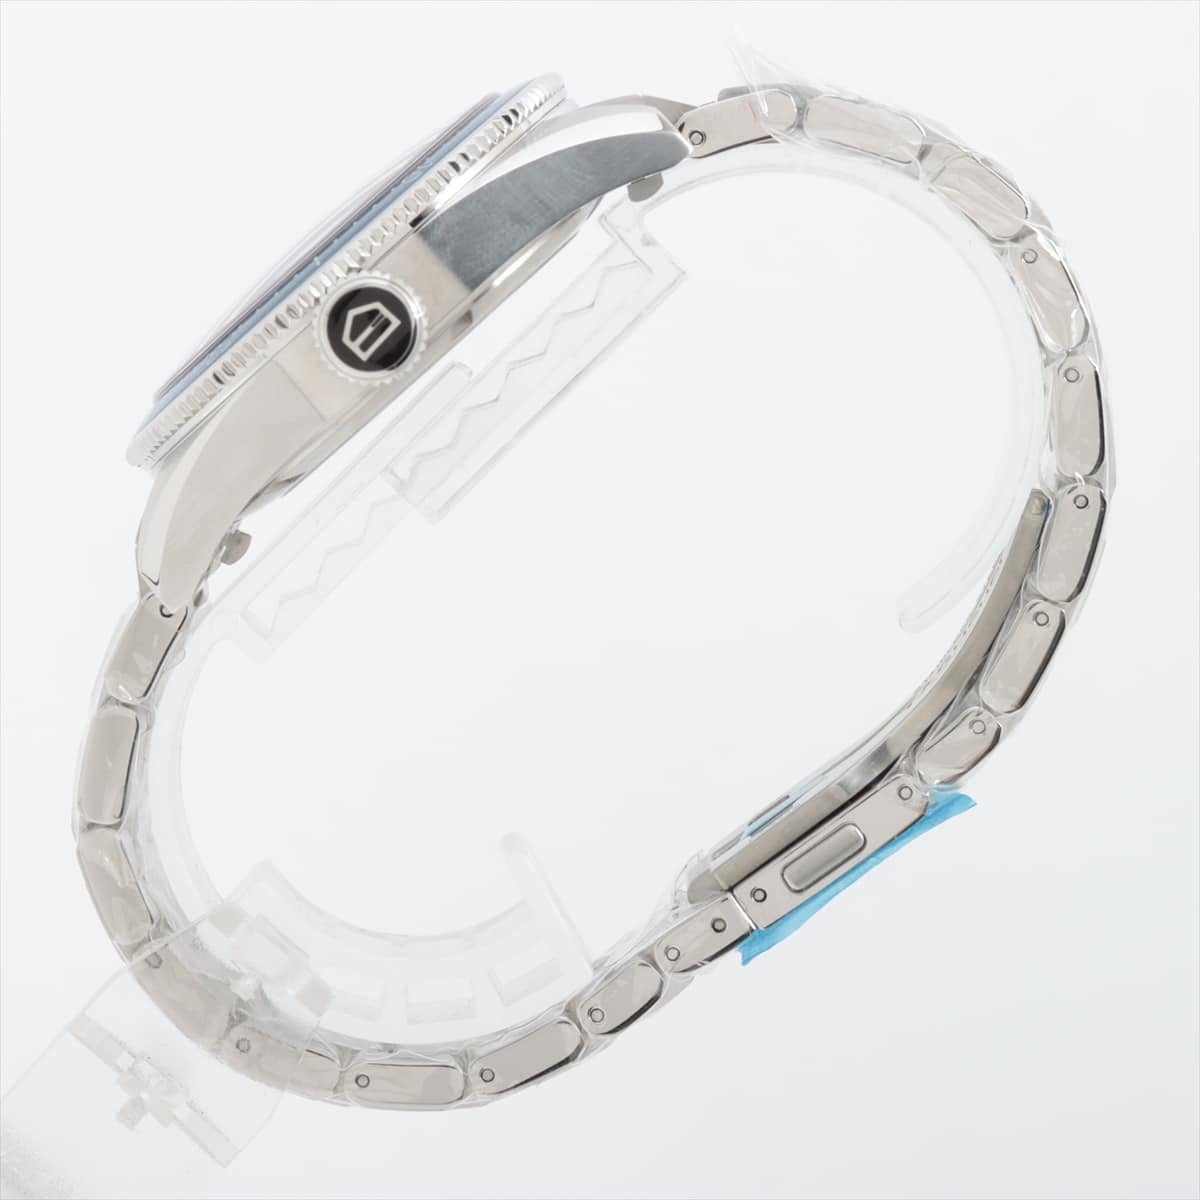 TAG Heuer Otavia Caliber5 Chronometer WBE5116.EB0173 SS AT Blue-Face